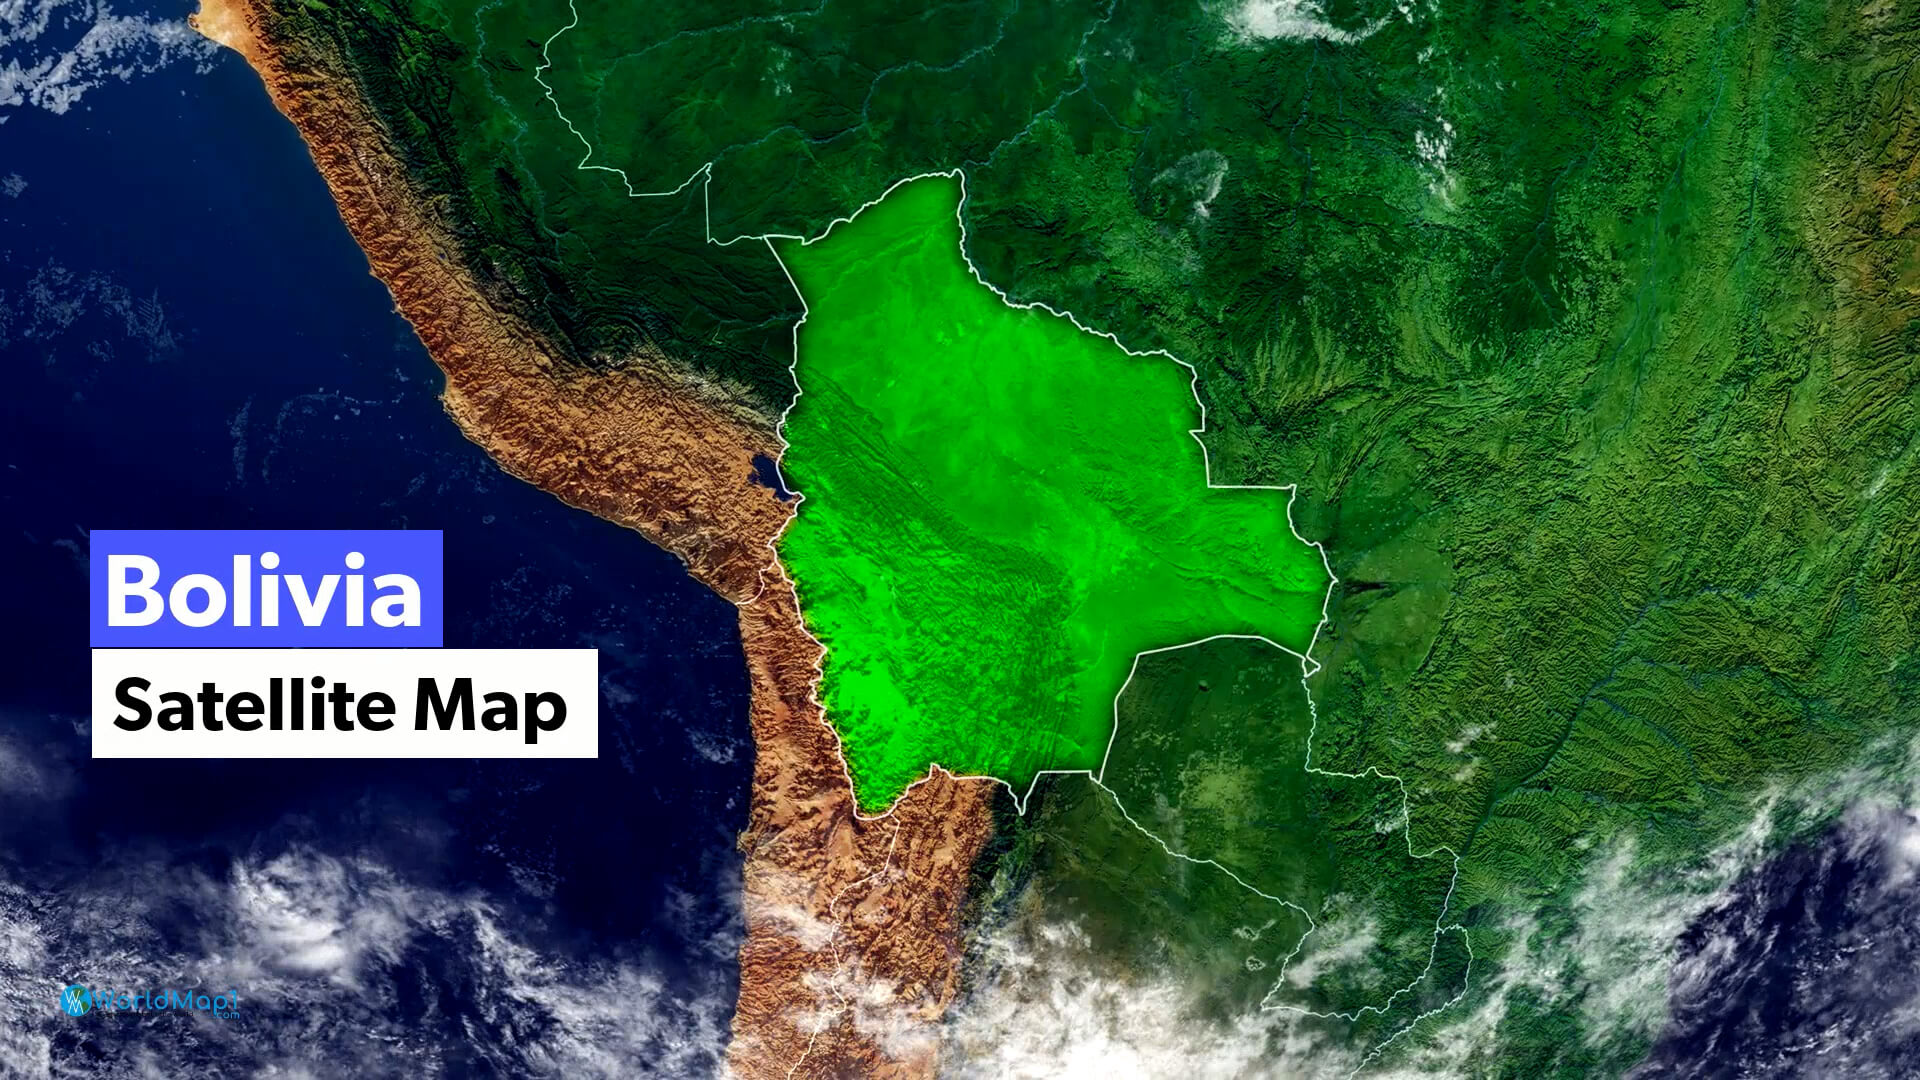 Bolivia Satellite Image